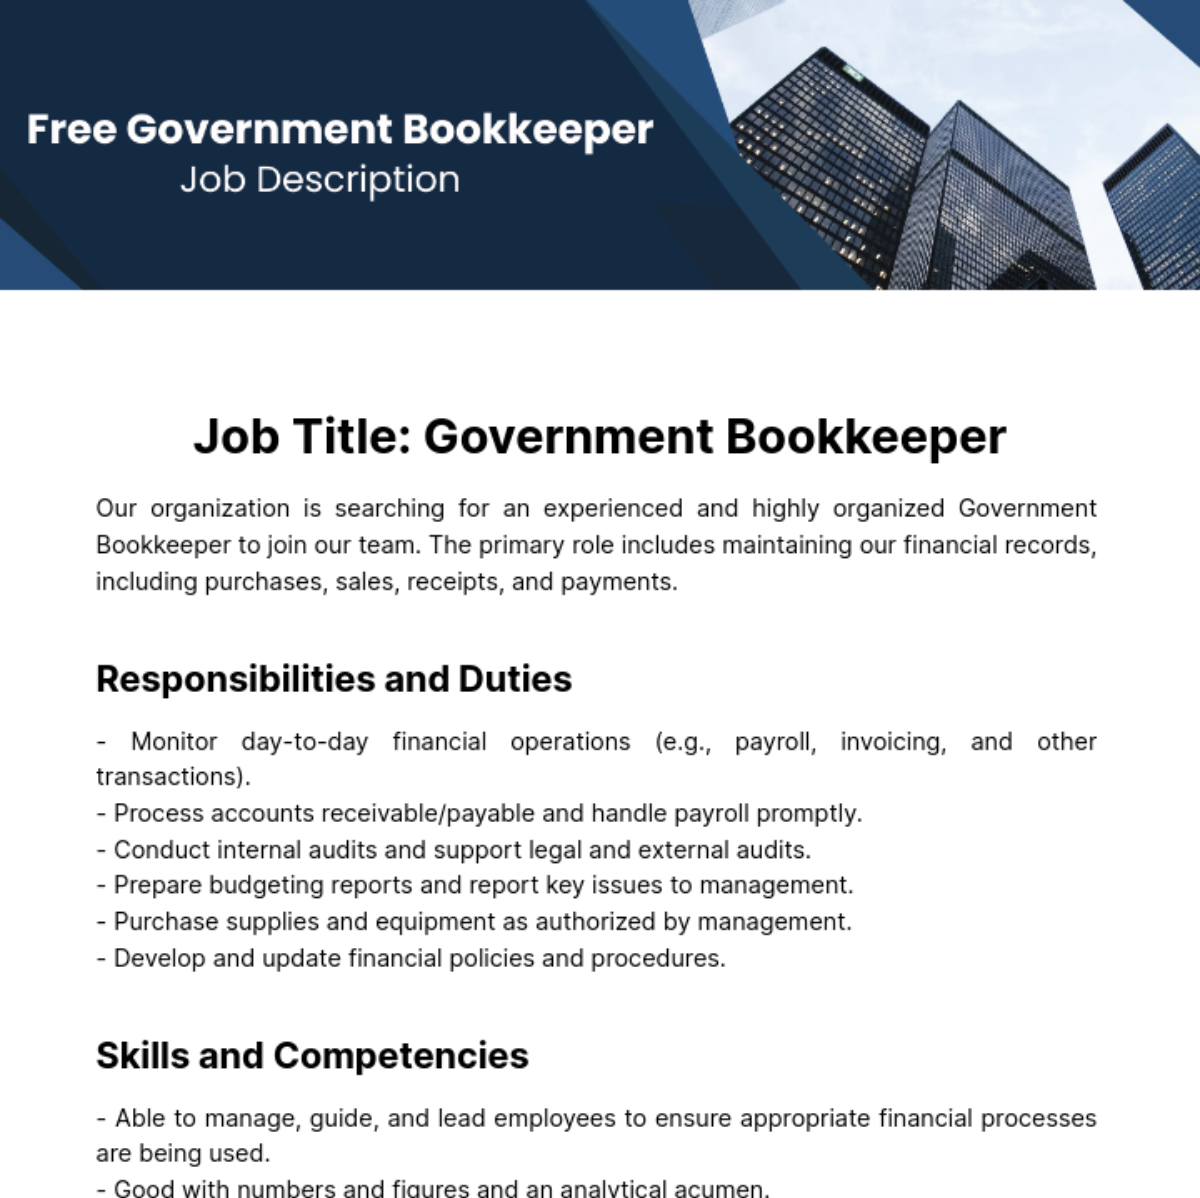 Free Government Bookkeeper Job Description Template